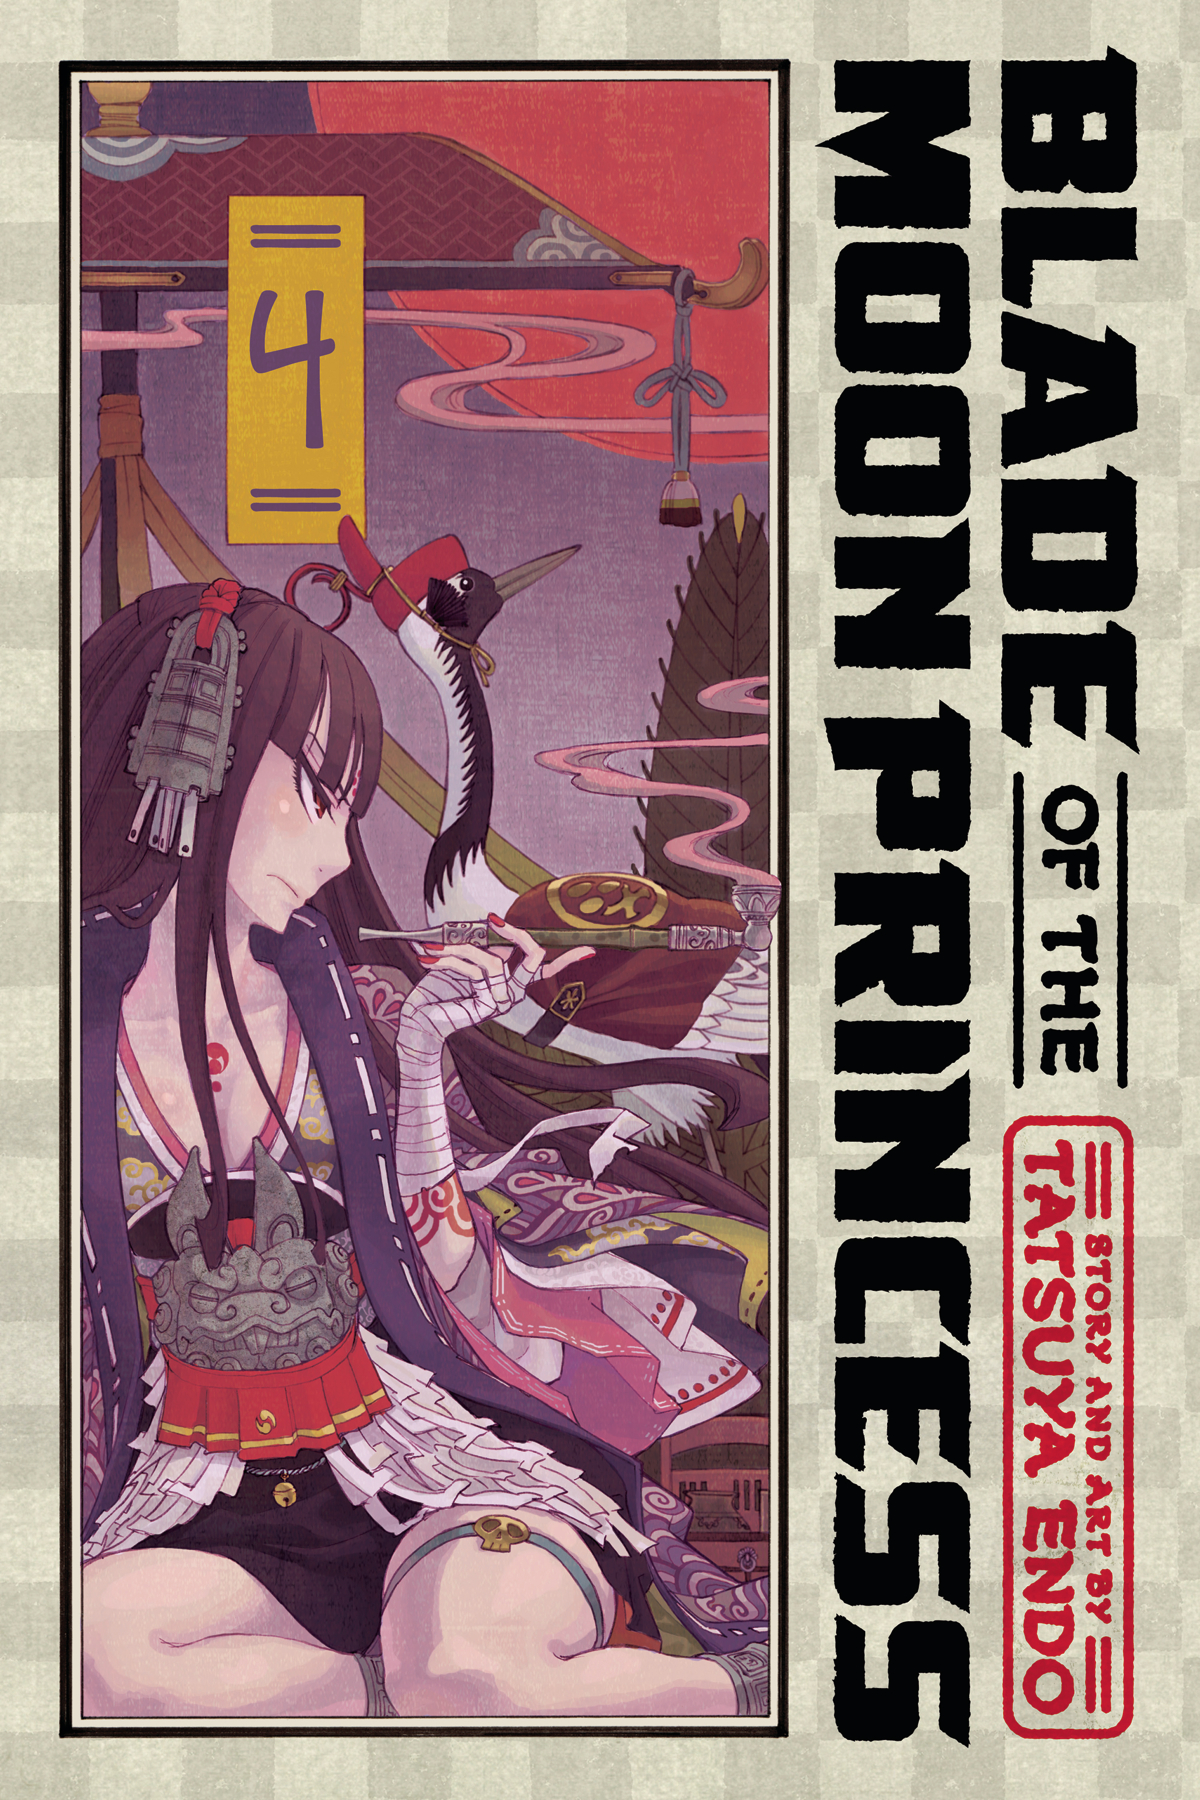 Blade of the Moon Princess Graphic Novel Volume 4